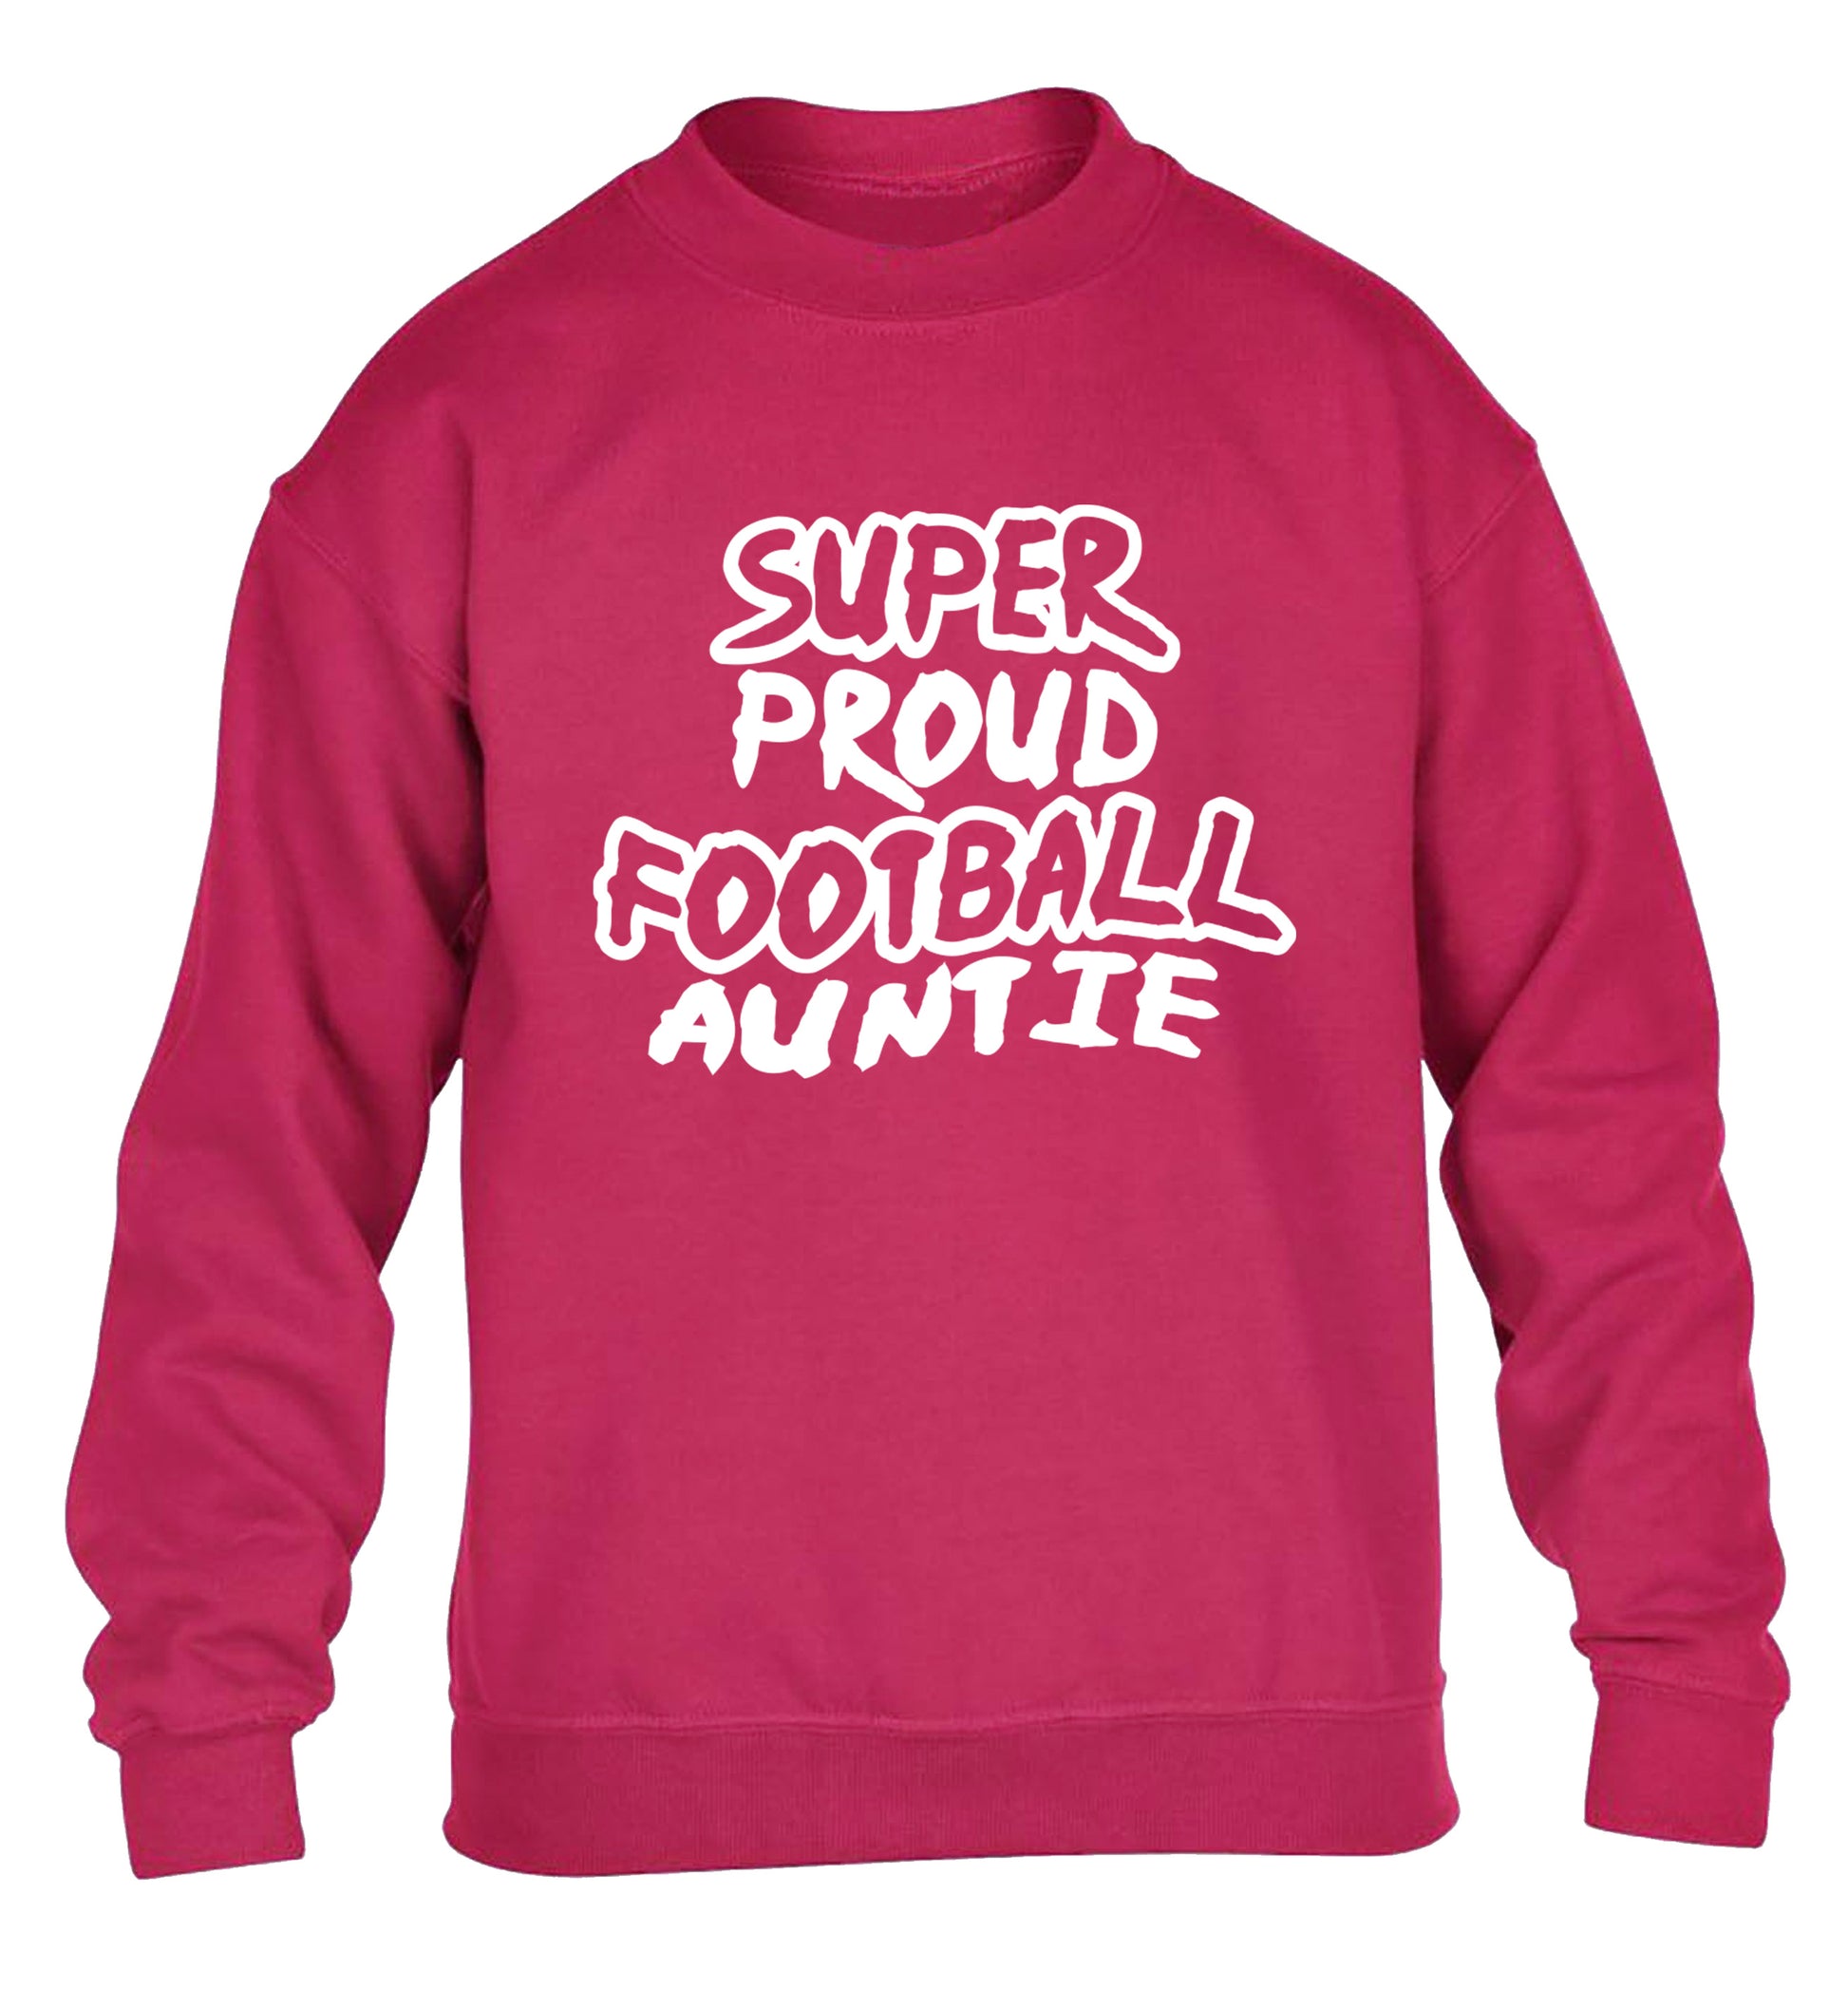 Super proud football auntie children's pink sweater 12-14 Years